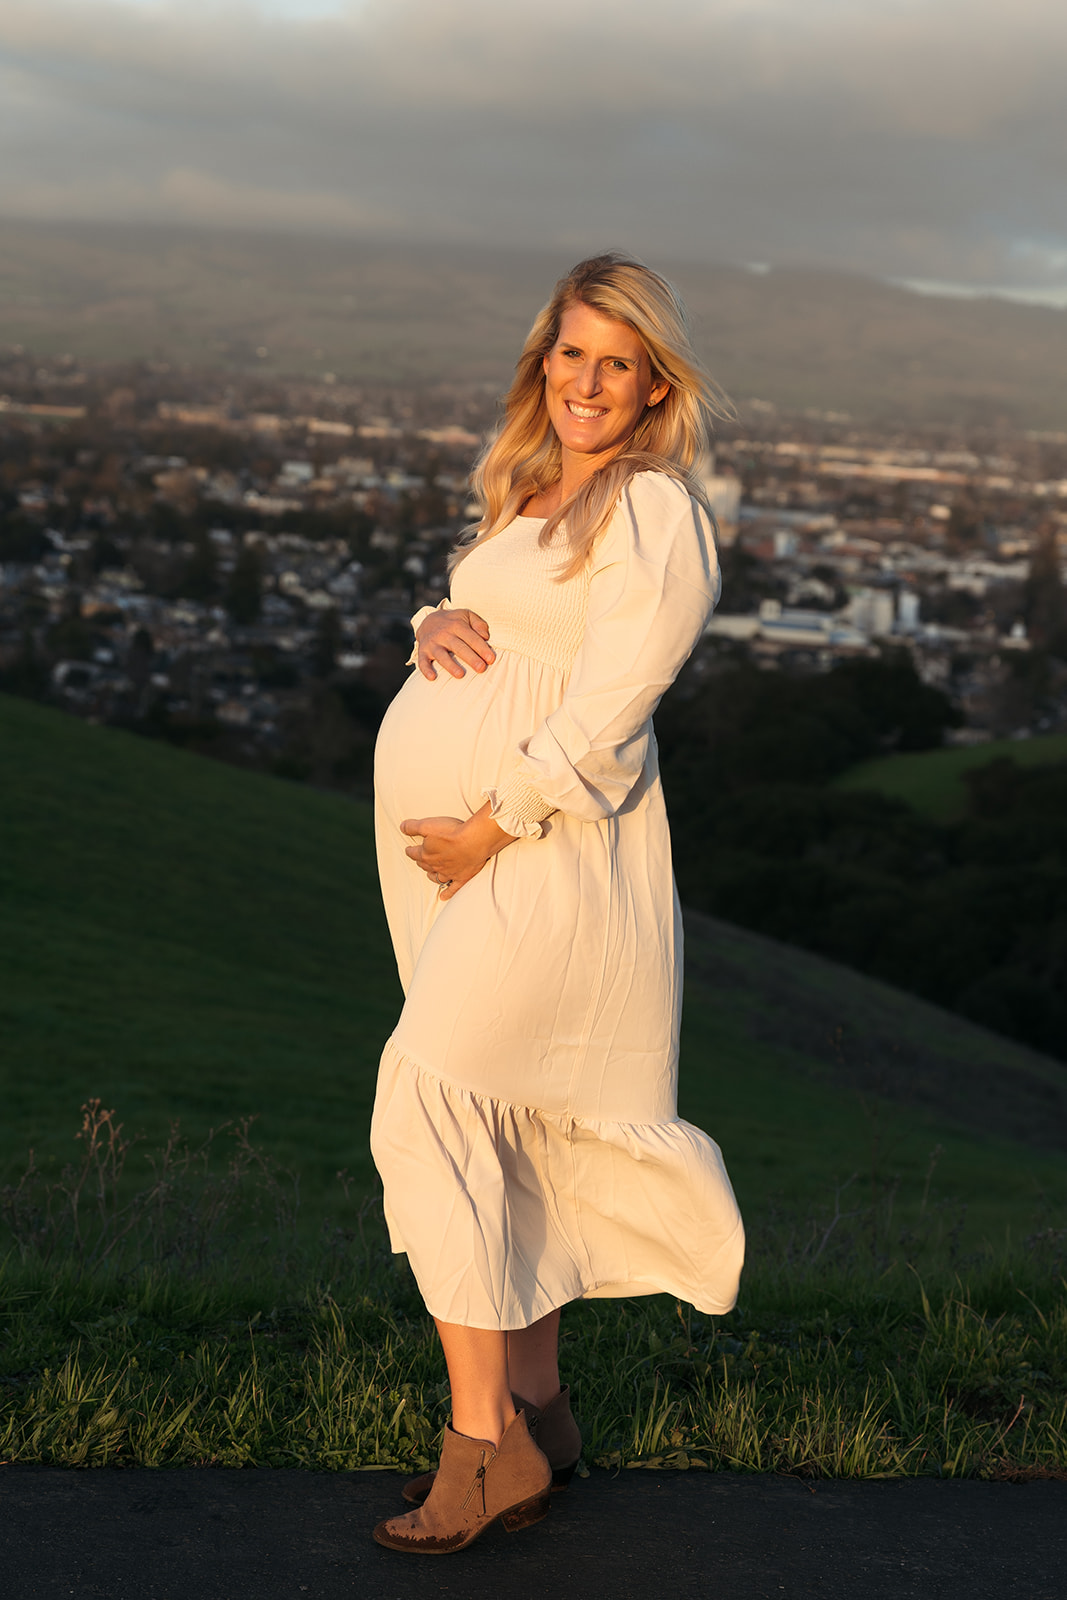 Maternity photoshoot during golden hour in the Petaluma hills